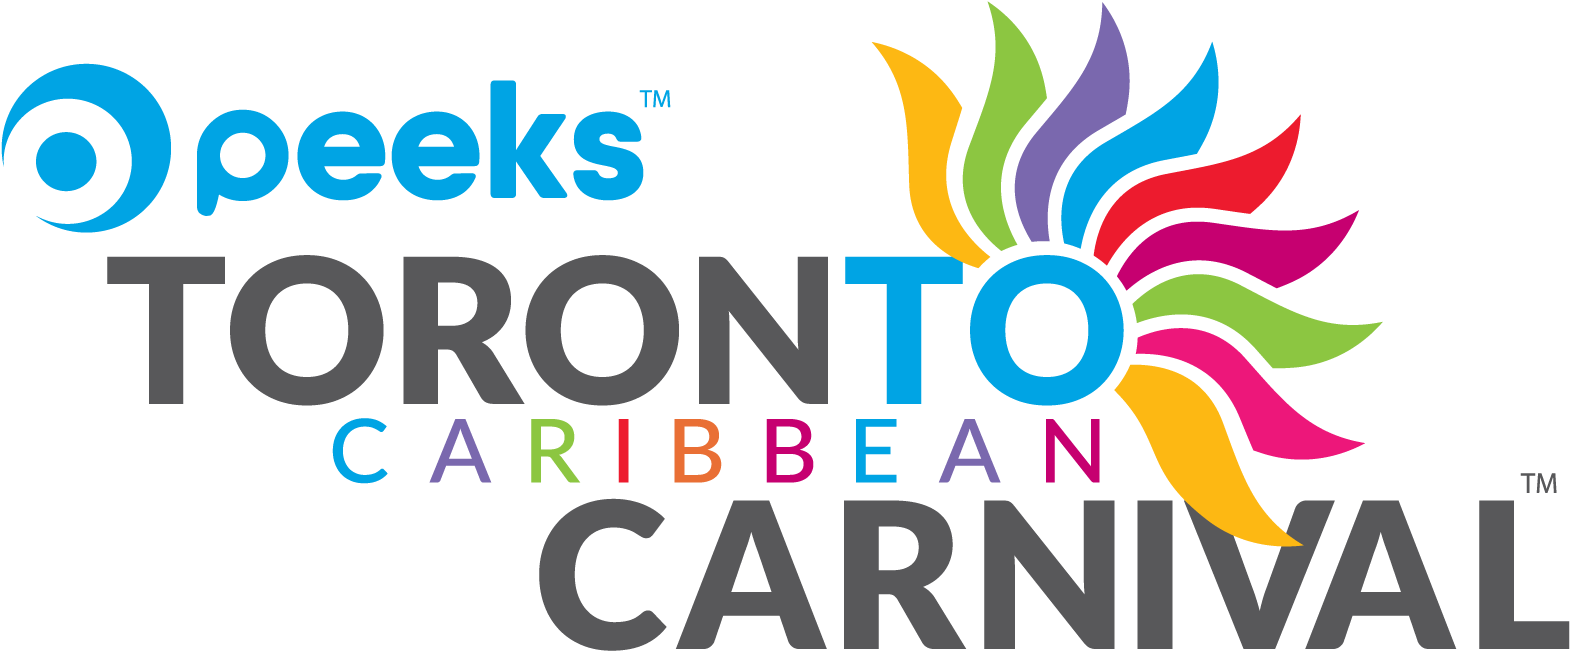 Toronto Caribbean Festival 2017 (1610x667)